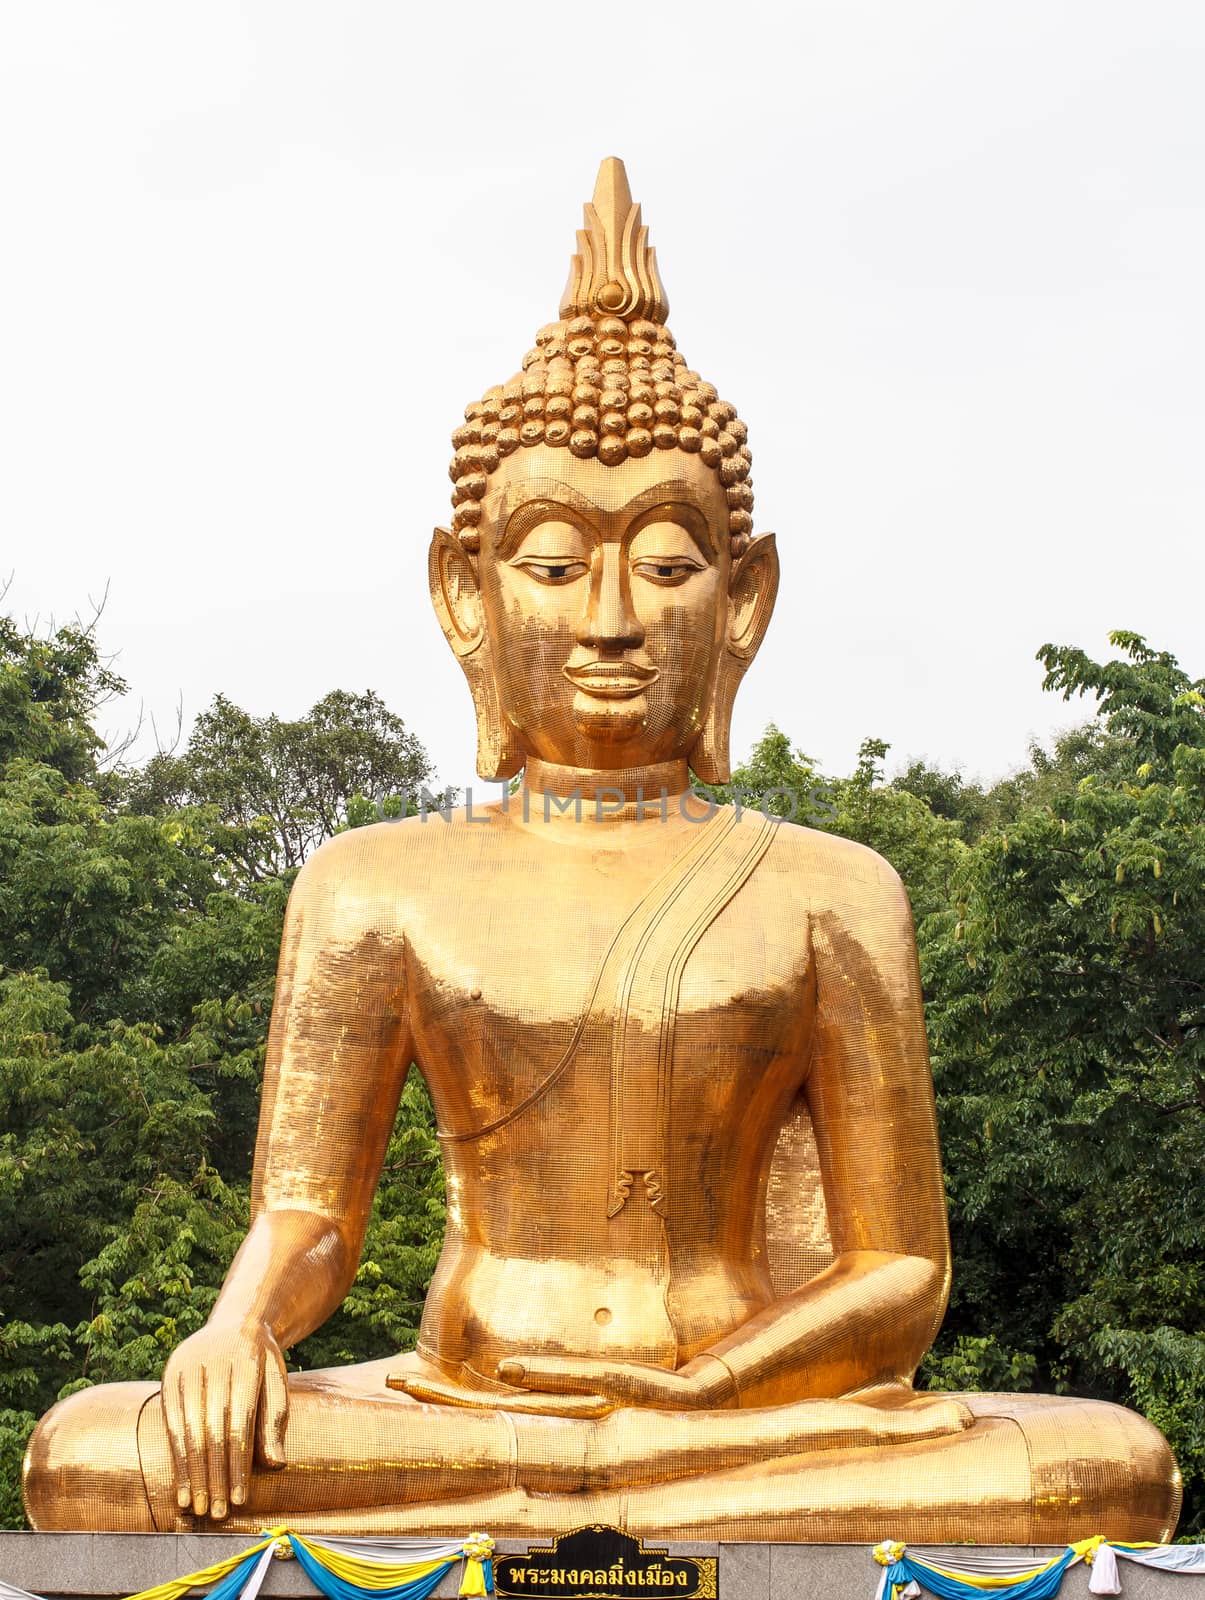 Golden Buddha temple in Thailand.